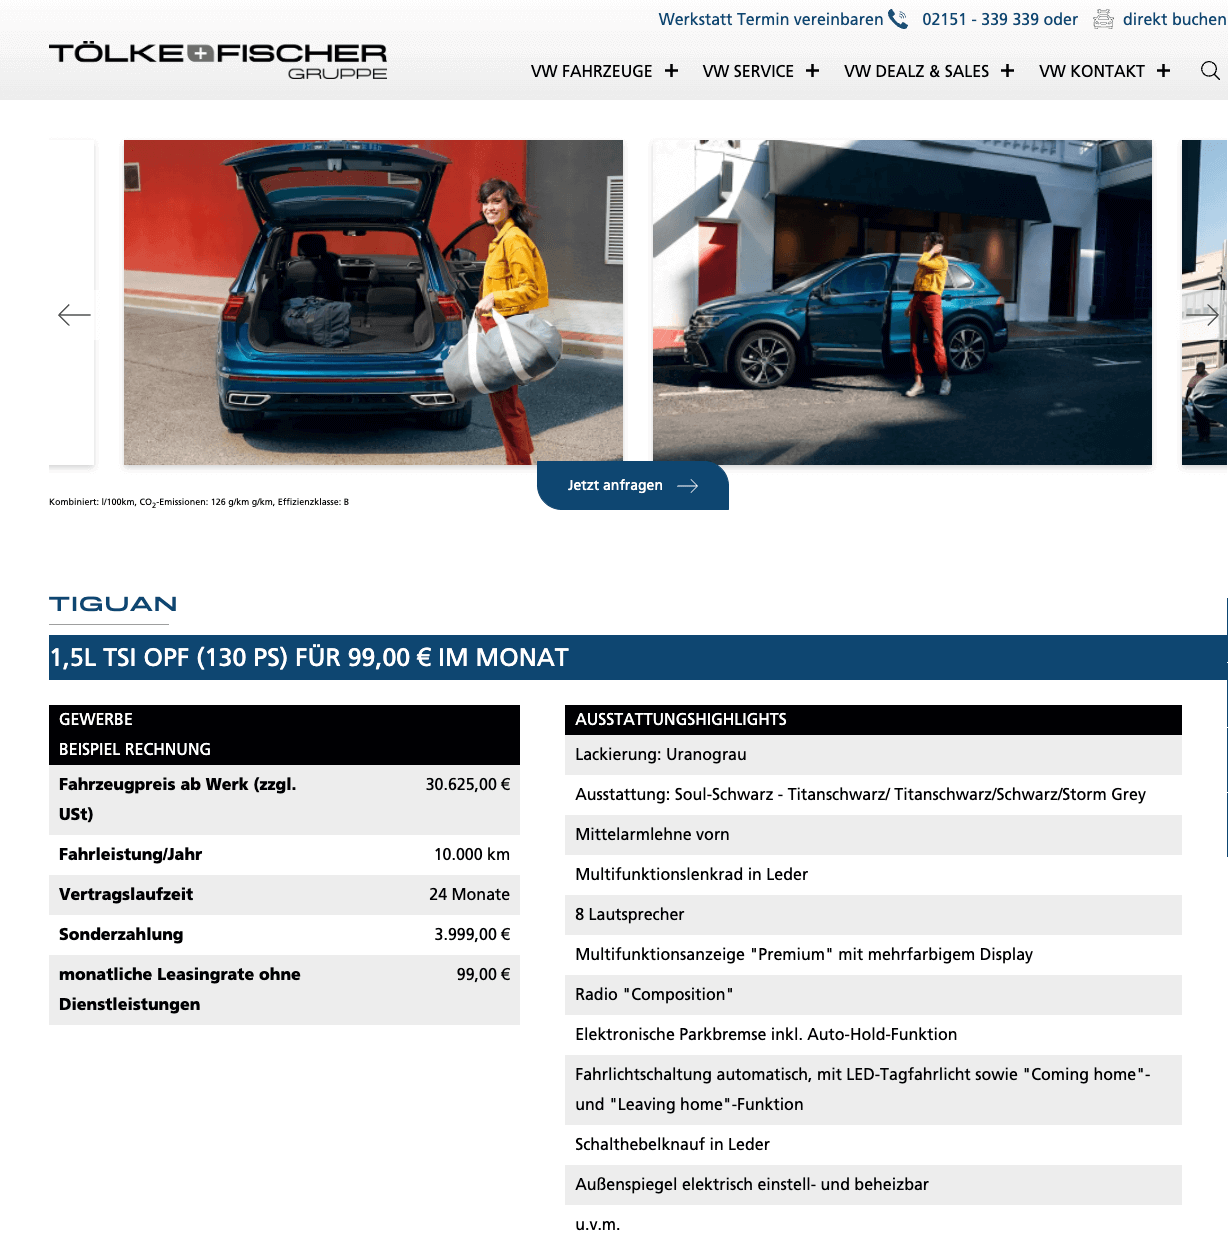 VW Tiguan im Leasing für 99 Euro im Monat netto - ntv Autoleasing